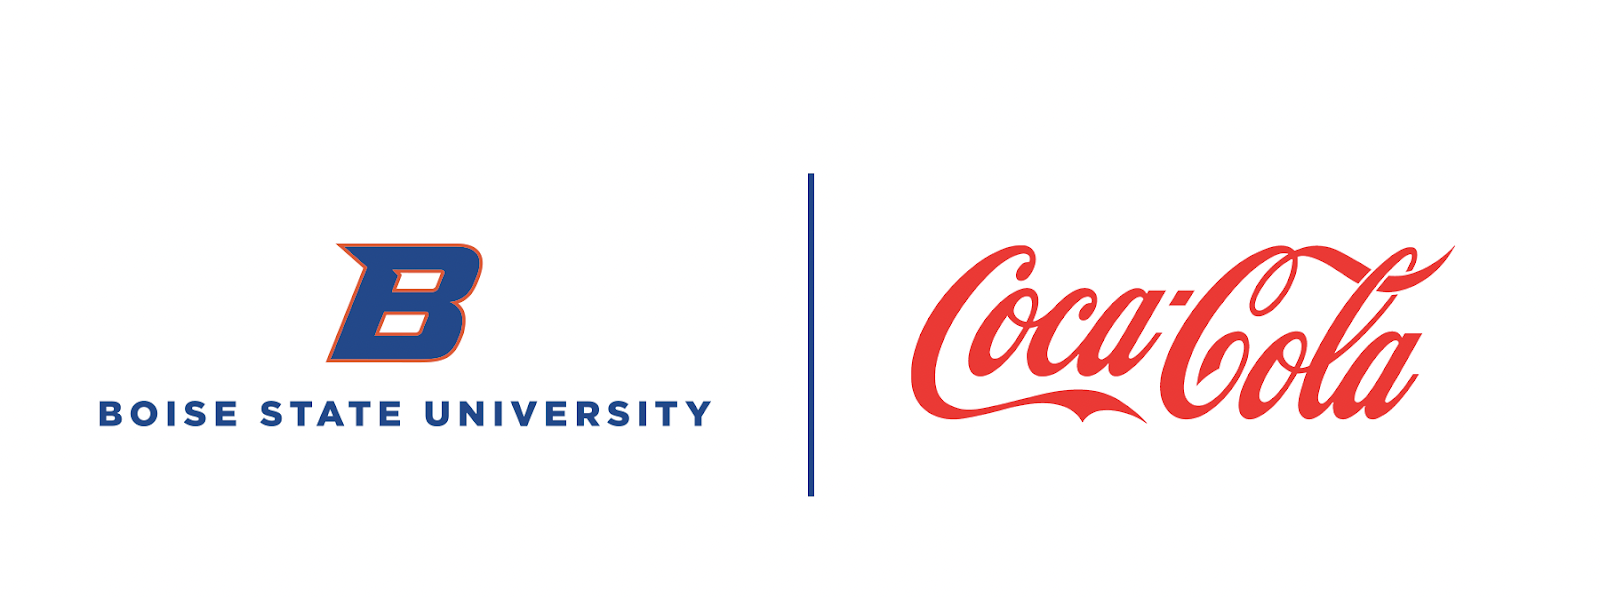 Design example, Boise State logo co-branded next to Coca Cola Logo